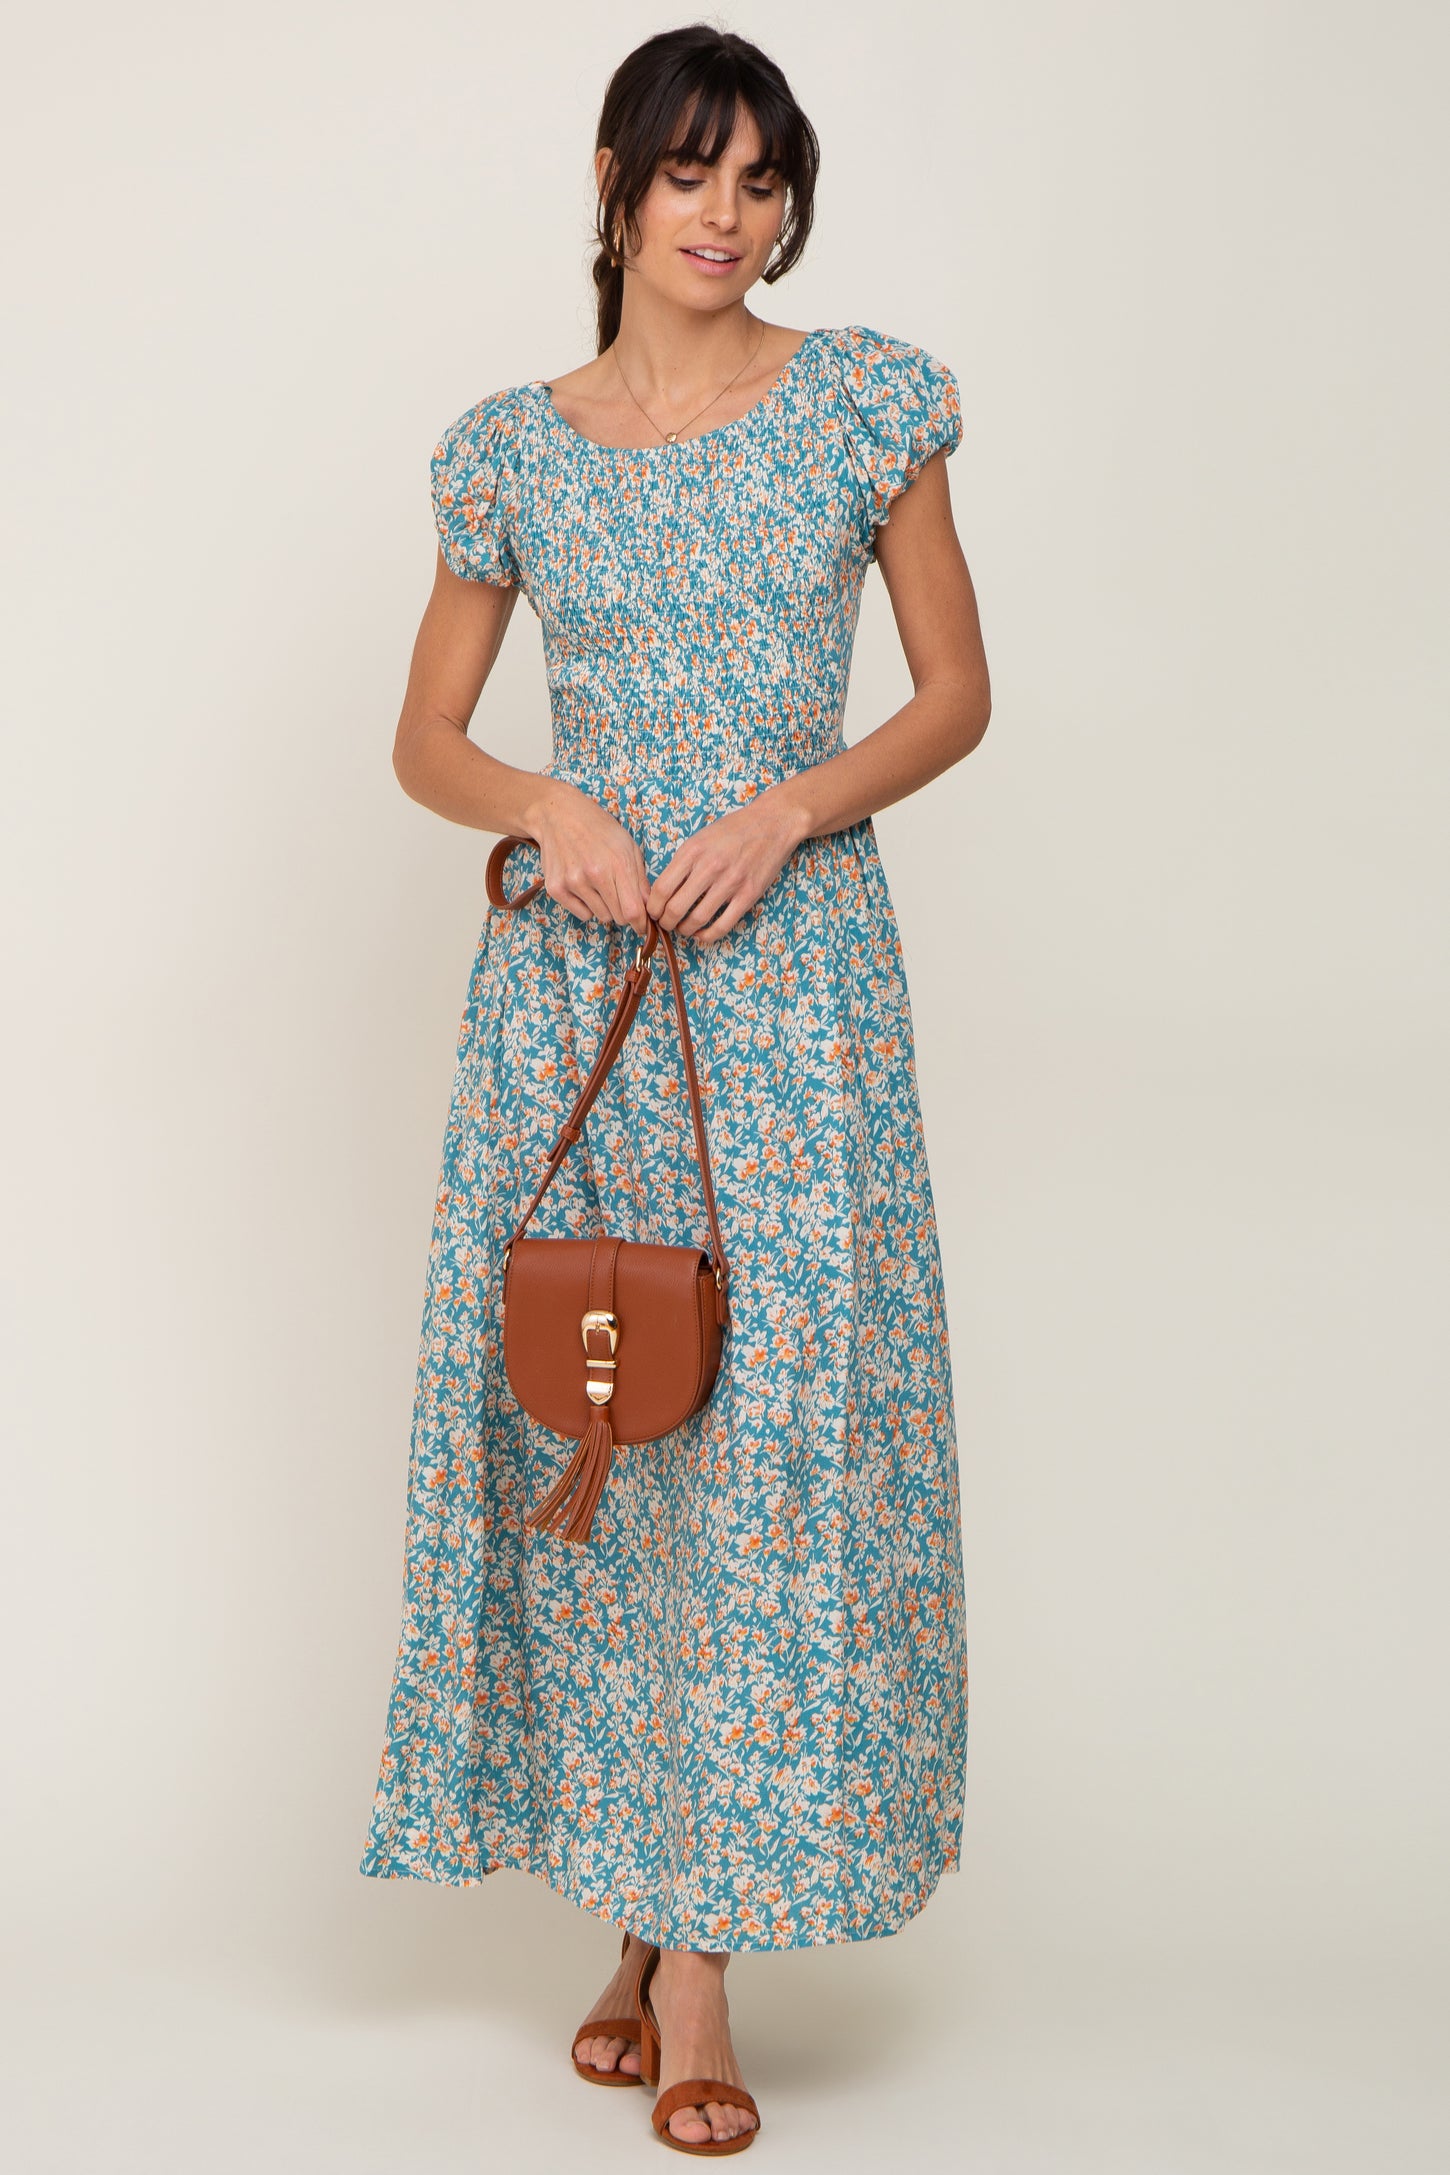 Jade Floral High Low Maxi Dress, S-3XL - ShopperBoard